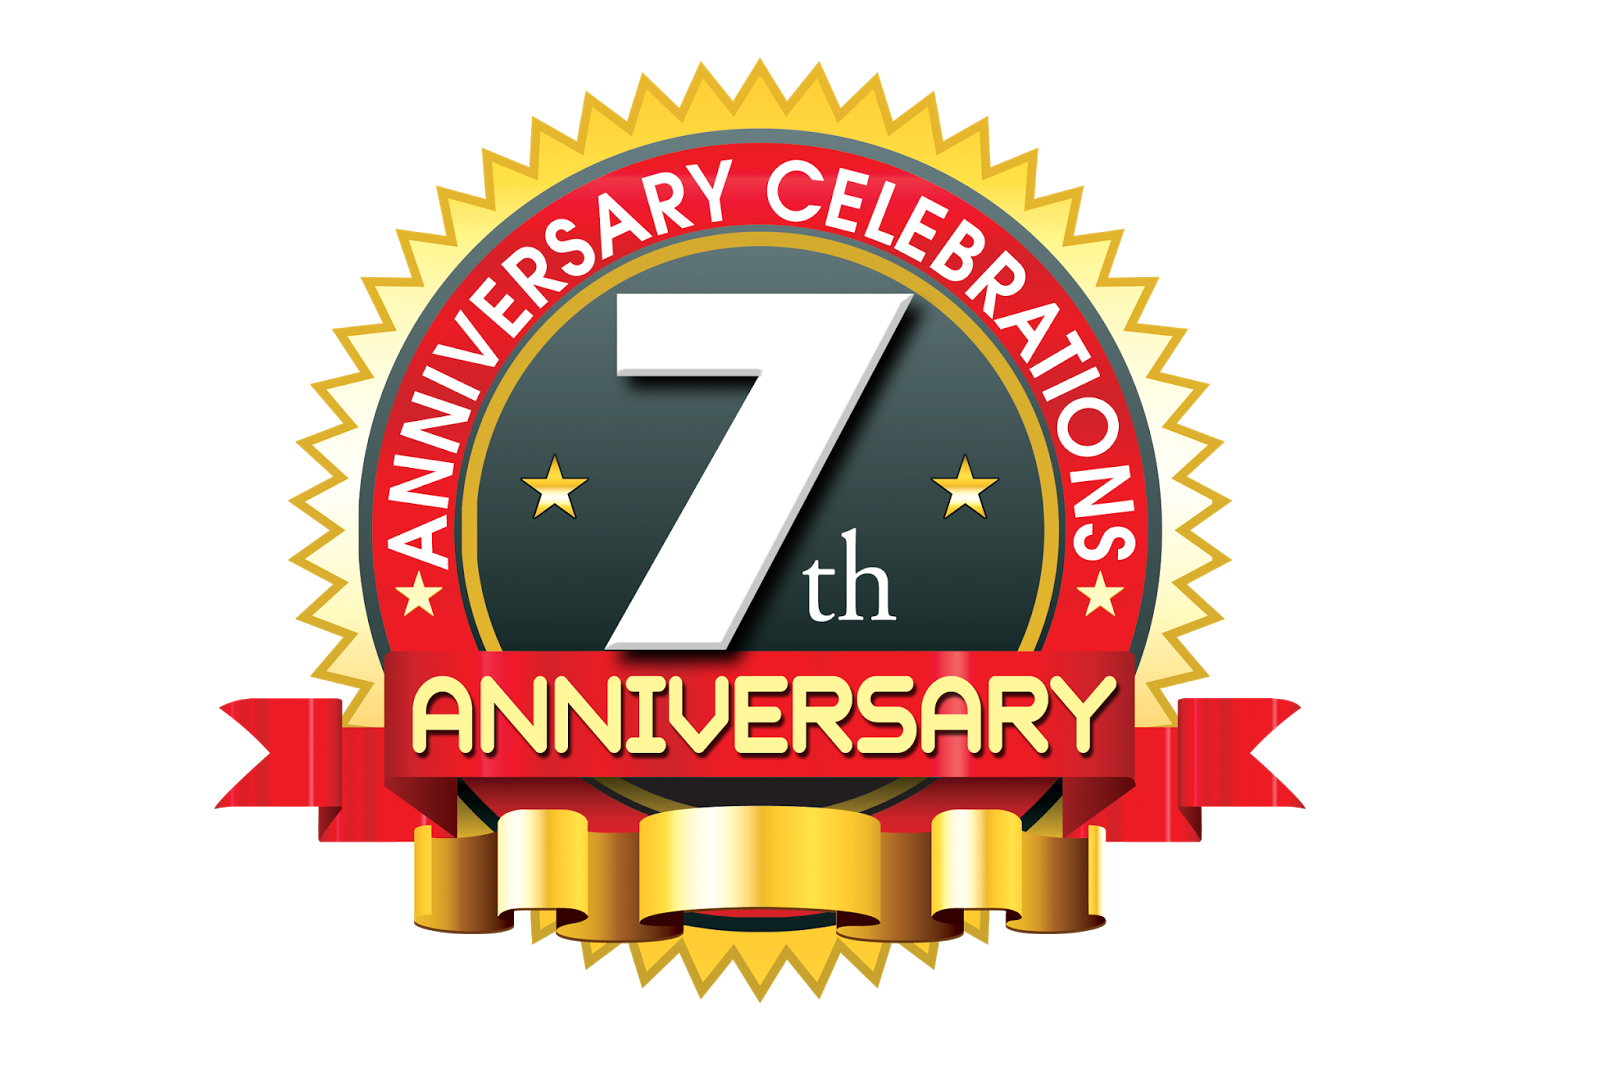 7th anniversary vector ping logo free online | naveengfx - 1600 x 1066 png 697kB